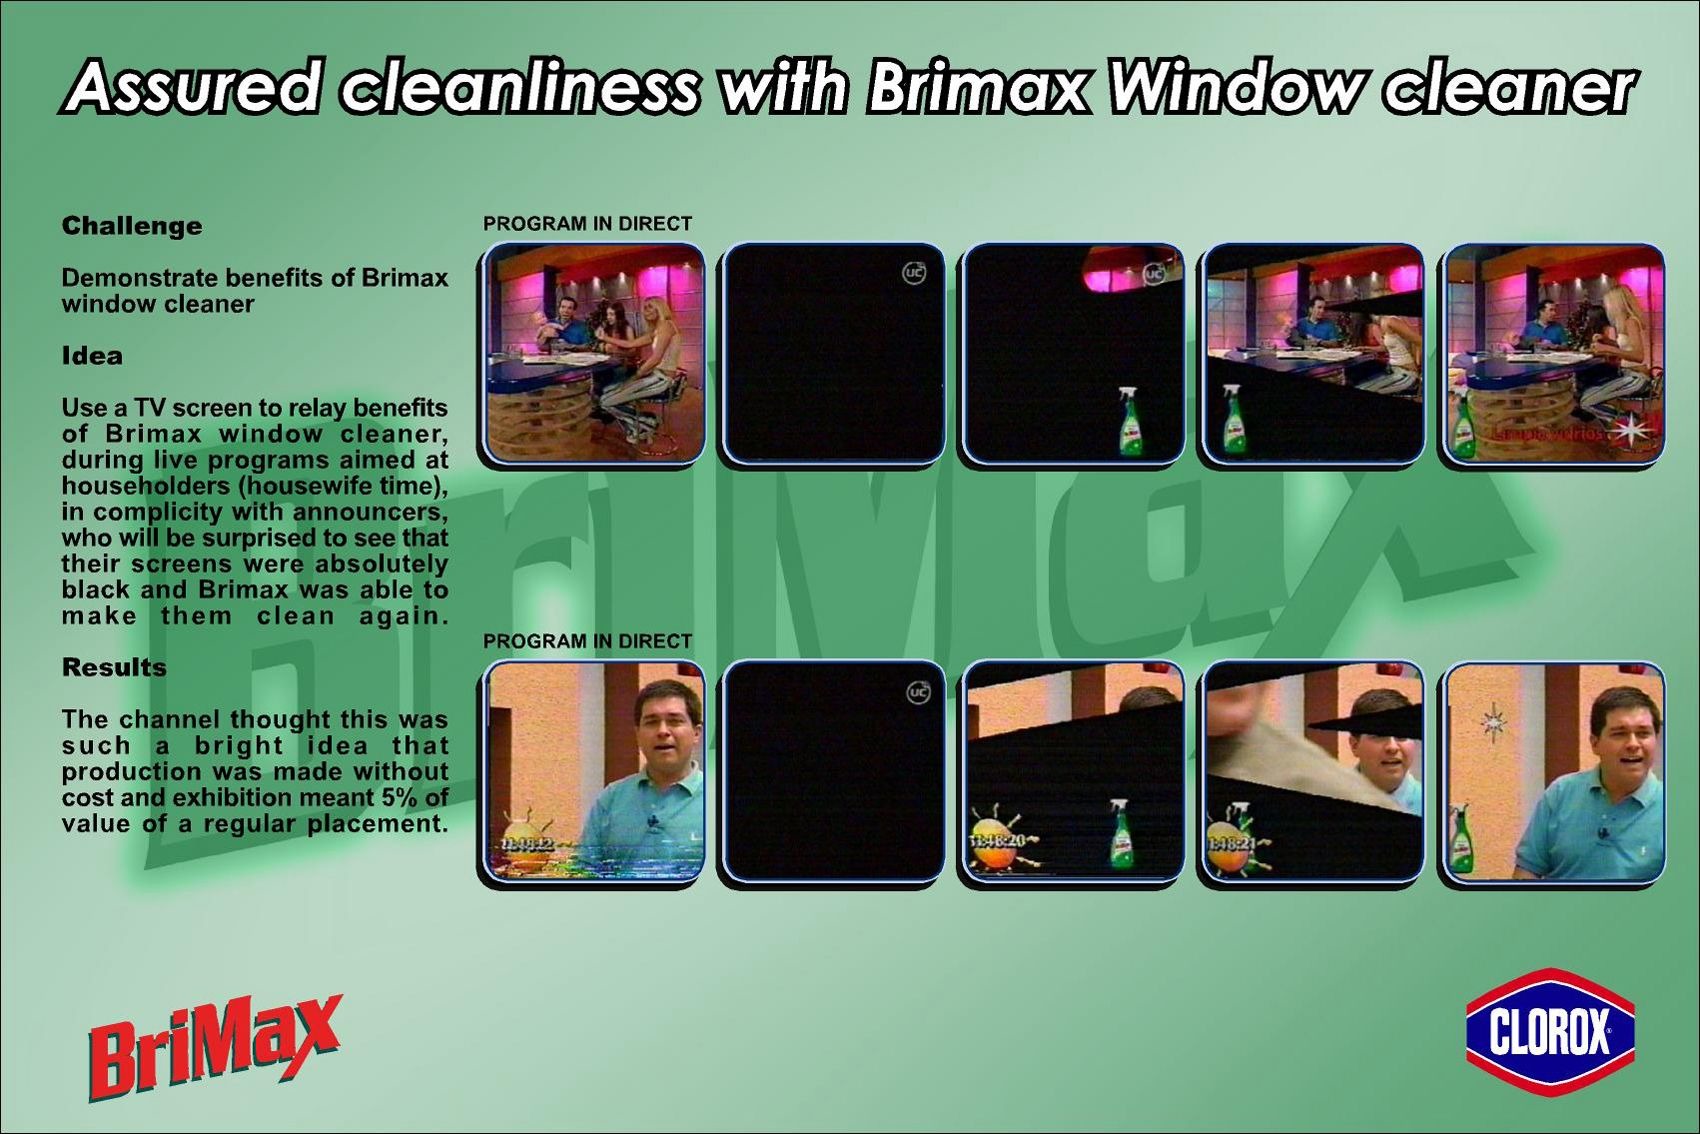 BRIMAX WINDOW CLEANER